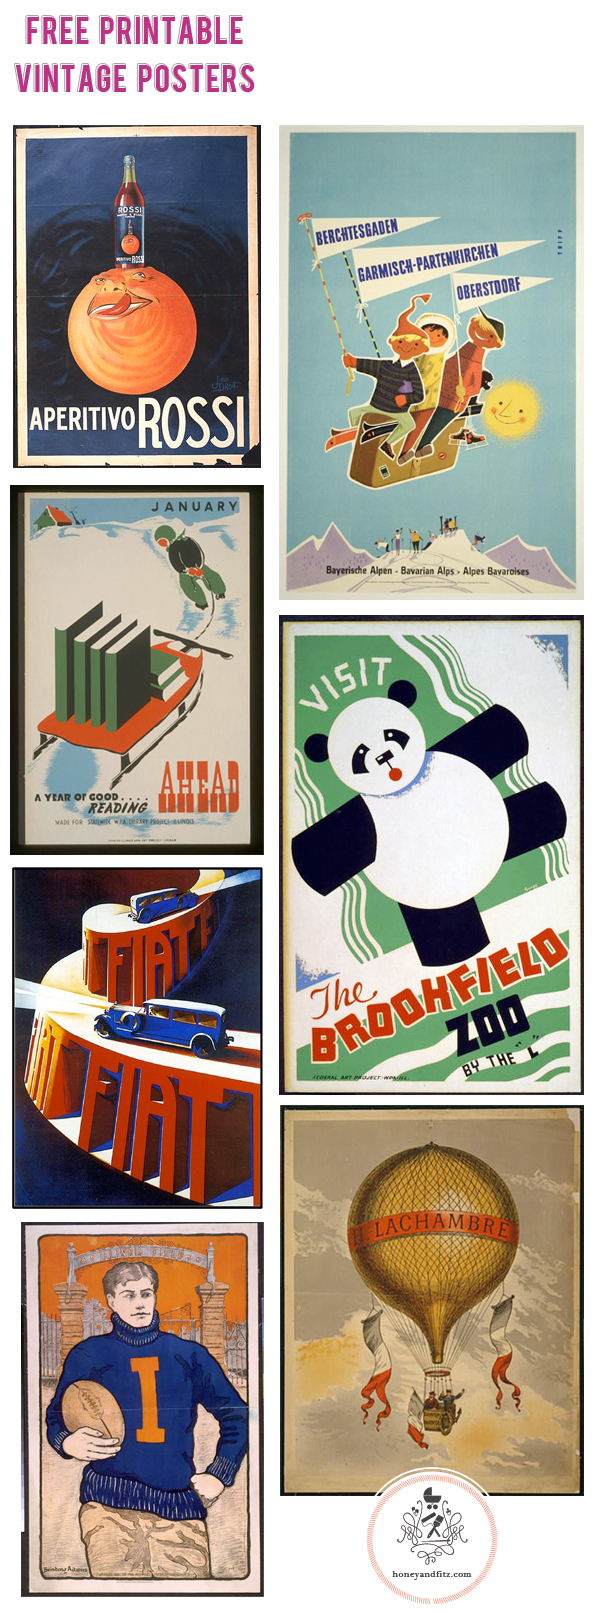 Free Printable Vintage Posters - Free Printable Sports Posters